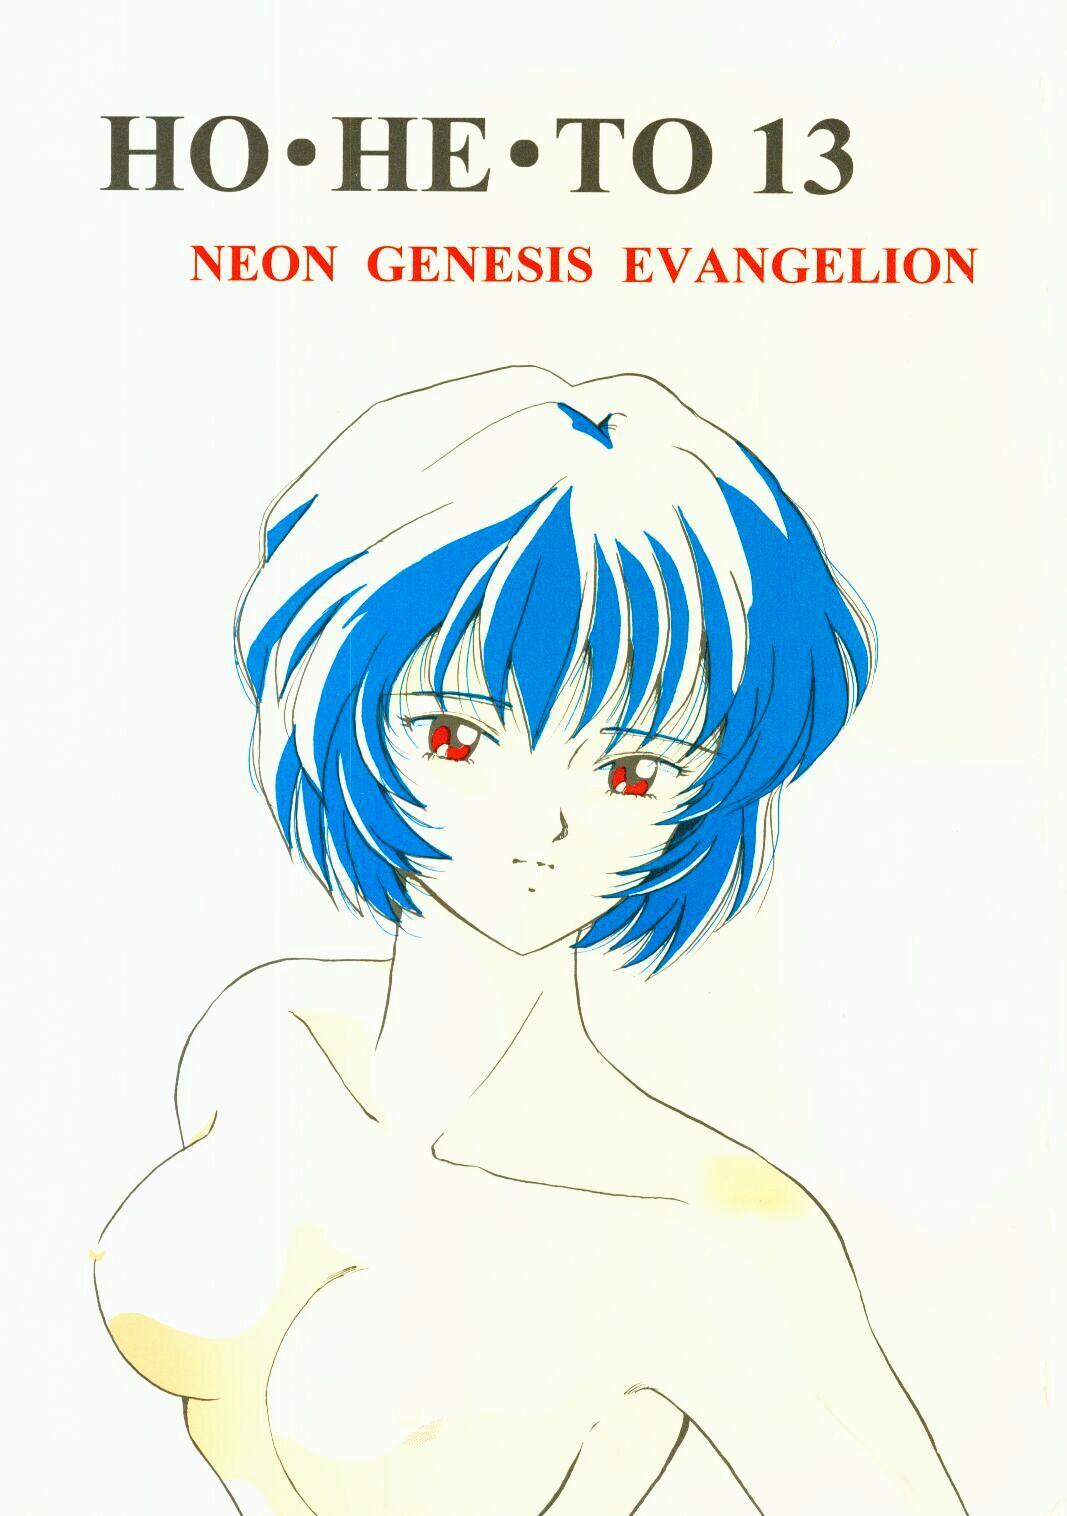 Young Tits (C50) [Studio Boxer (Shima Takashi, Taka) HOHETO 13 (Neon Genesis Evangelion) - Neon genesis evangelion Hugetits - Picture 1